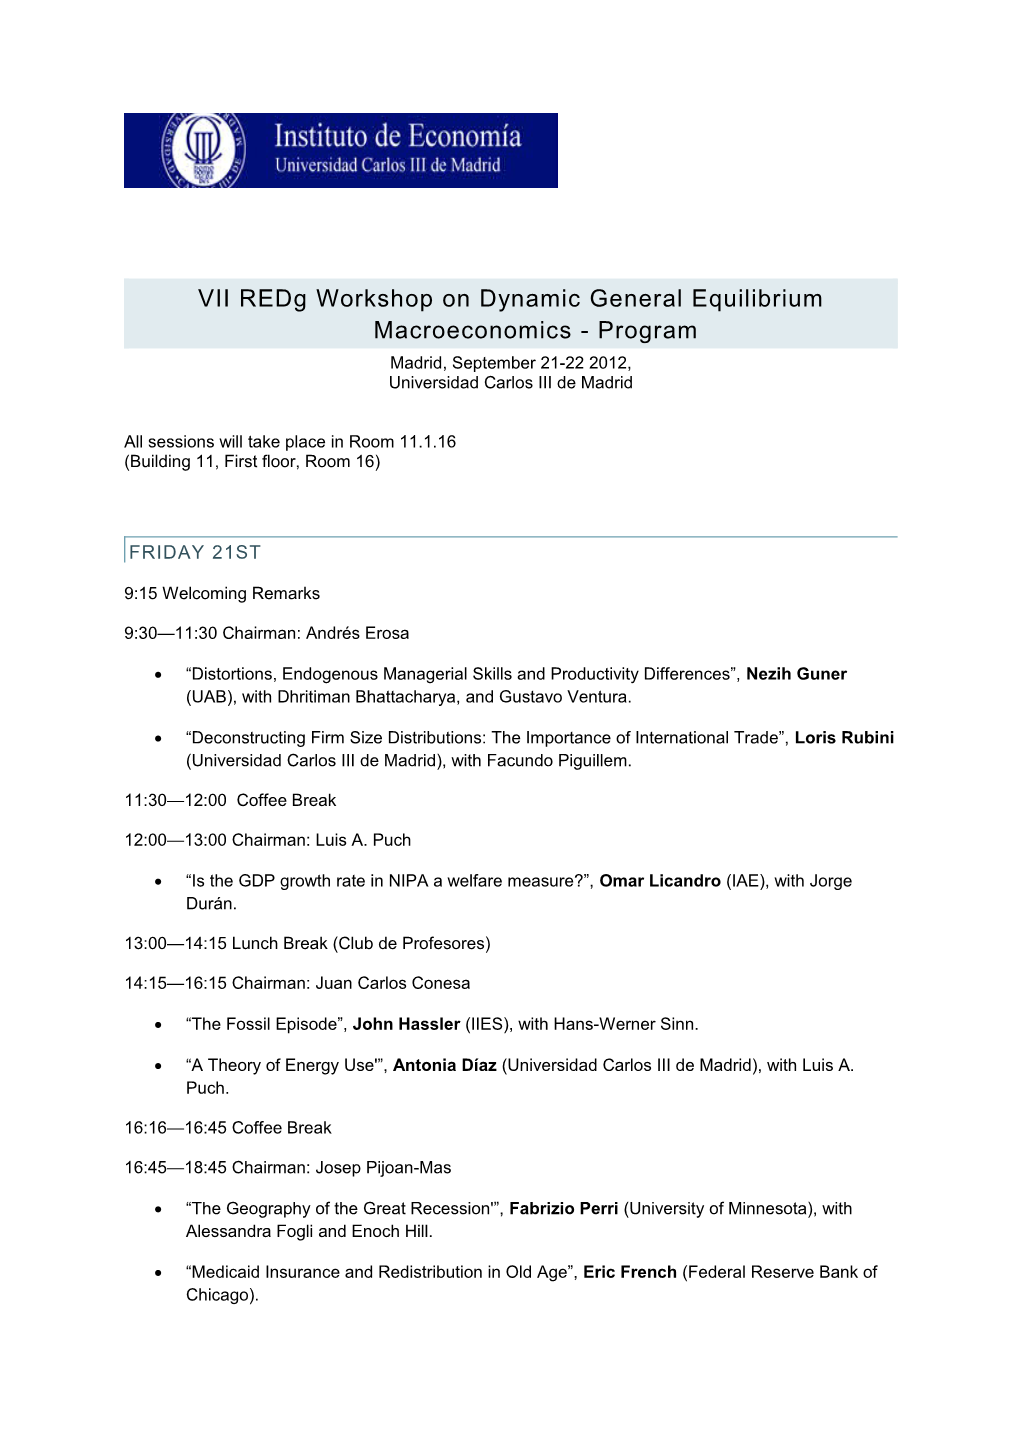 VII Redg Workshop on Dynamic General Equilibrium Macroeconomics - Program